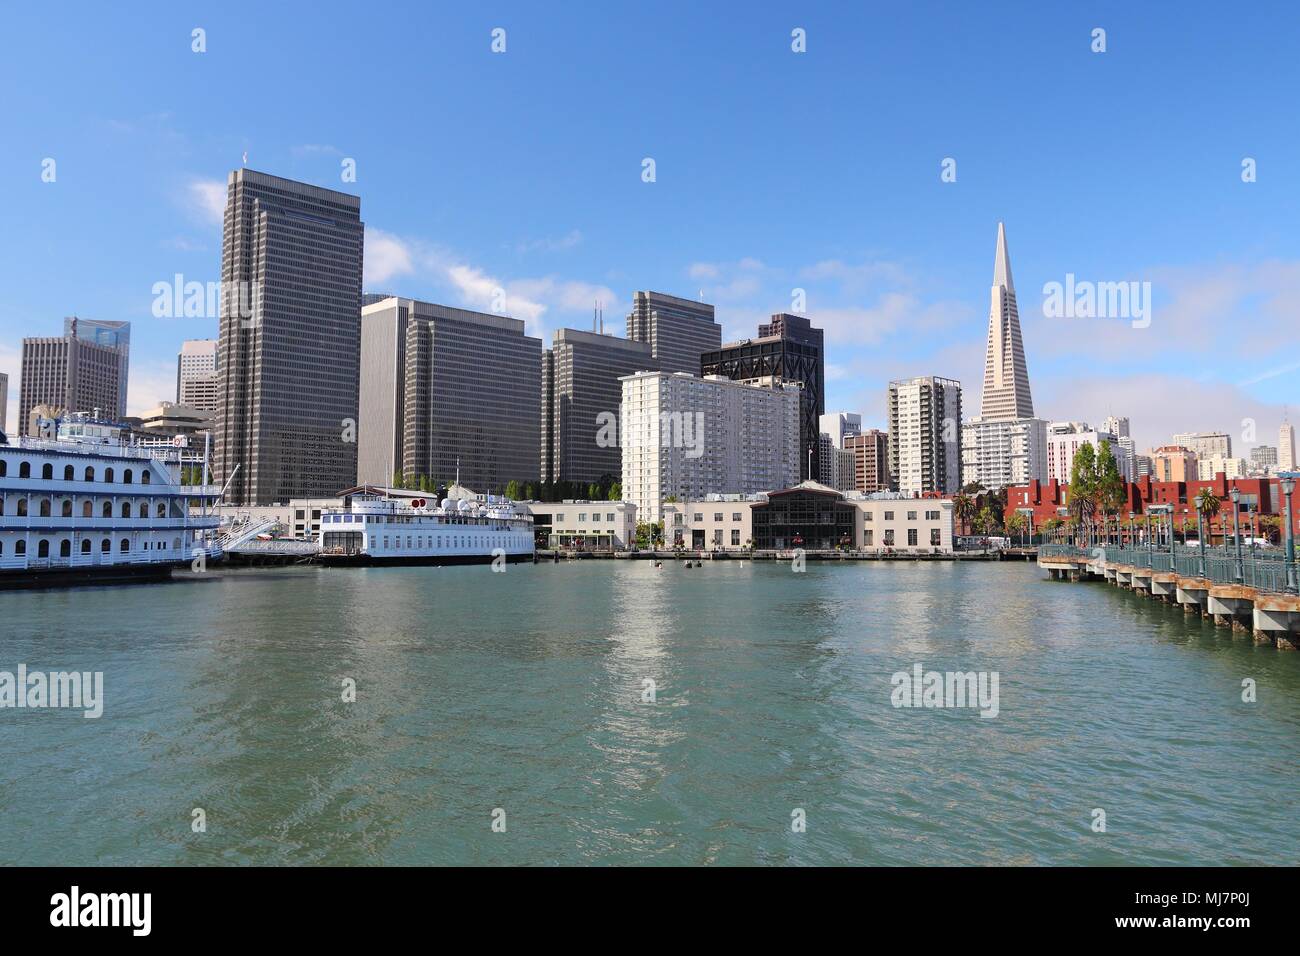 San Francisco, California, United States - city skyline seen from the harbor. Stock Photo